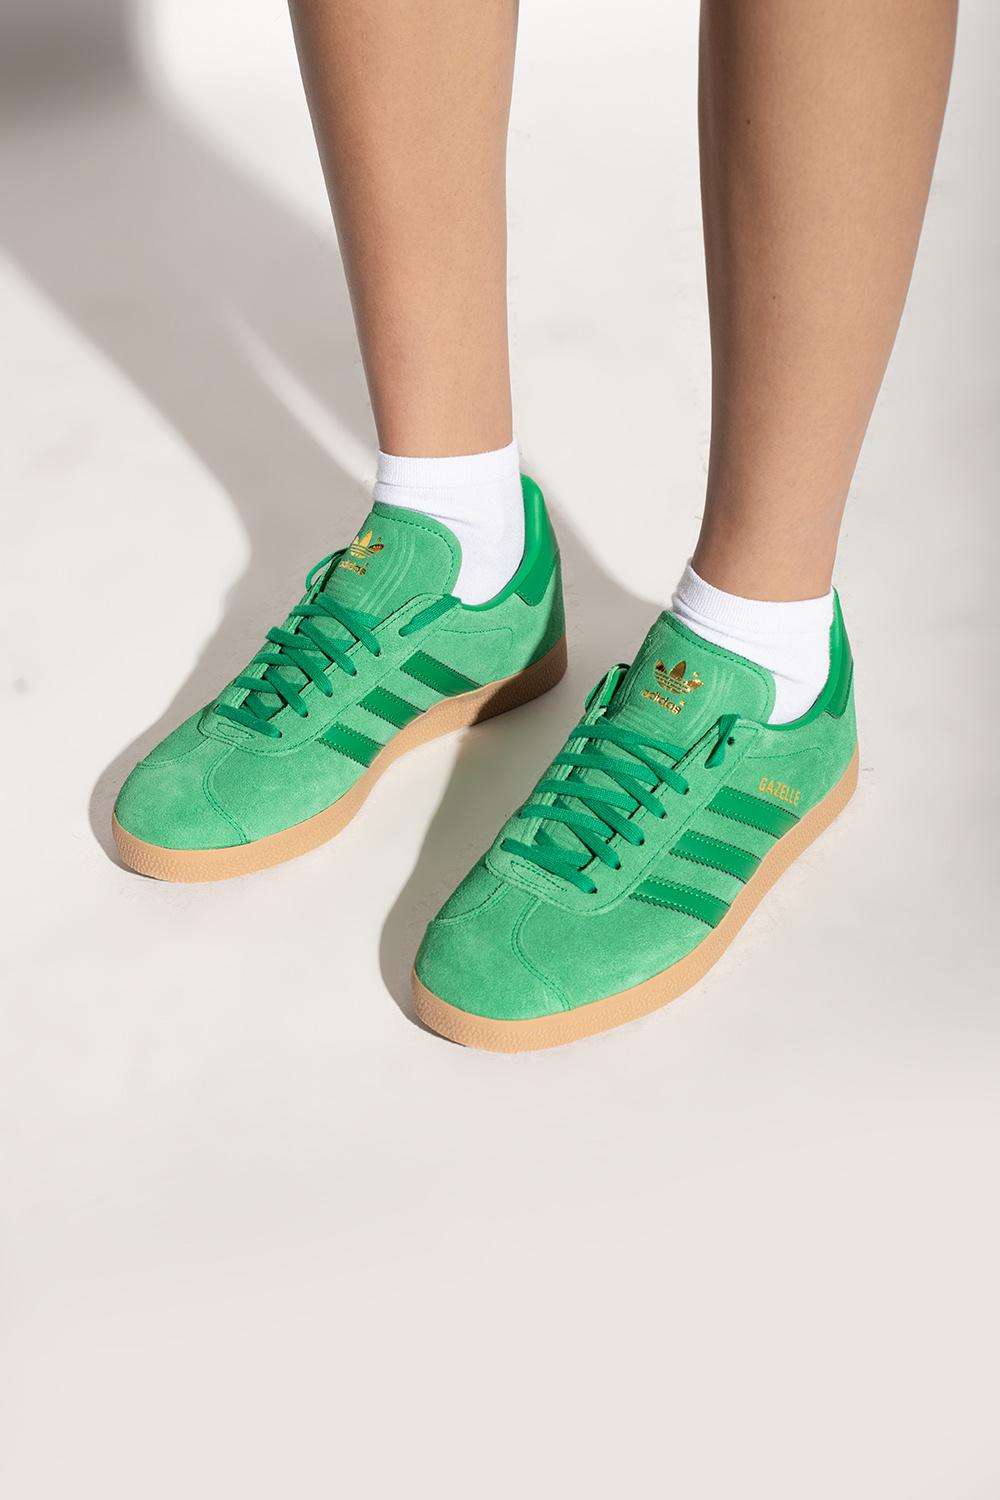 adidas Originals 'gazelle' Sneakers in Green | Lyst